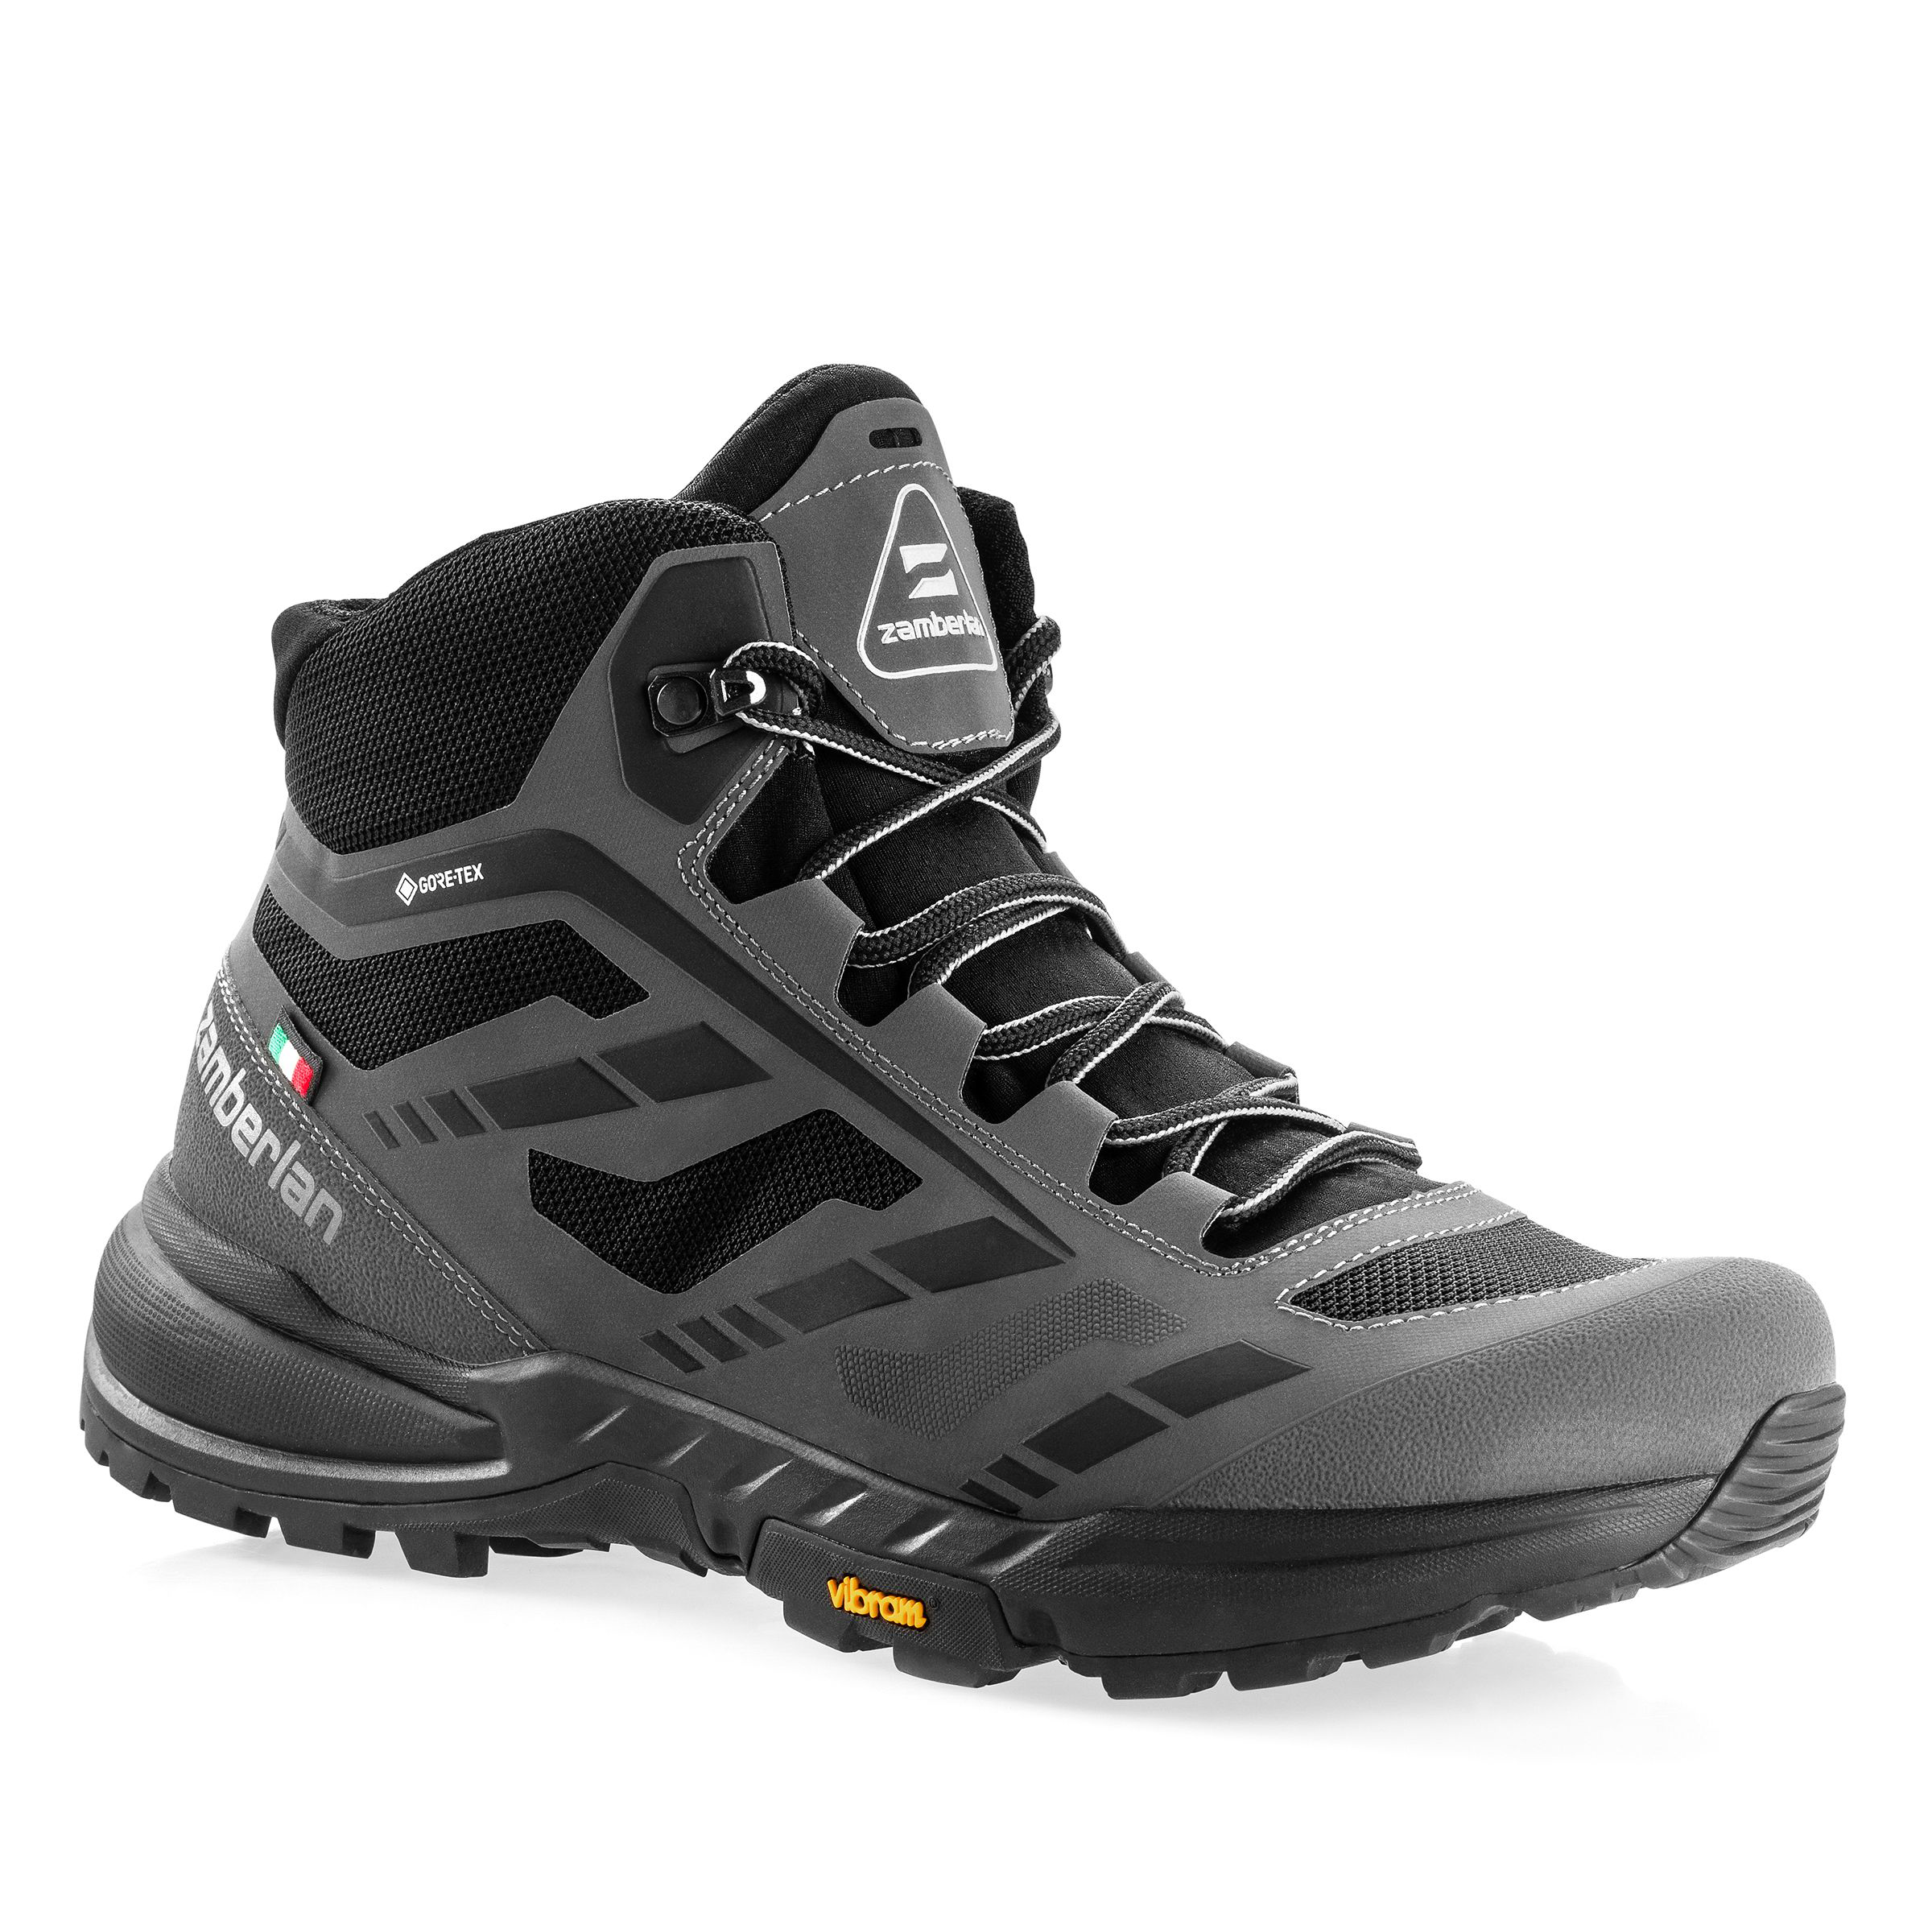 Zamberlan 219 Anabasis GTX Waterproof Mid Hiking Boots for Men